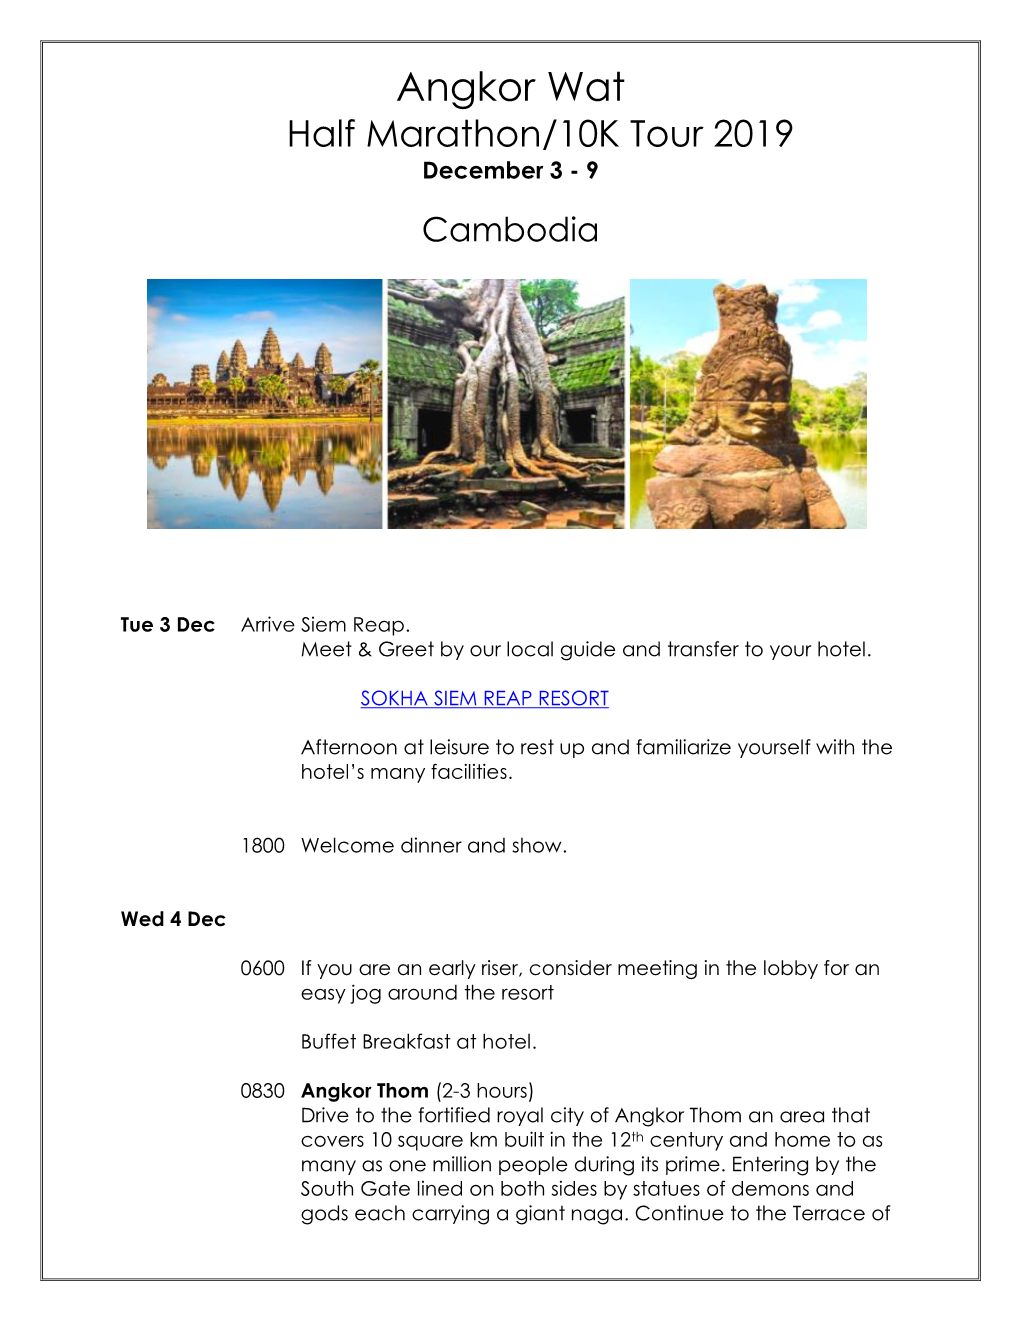 Angkor Wat Half Marathon/10K Tour 2019 December 3 - 9